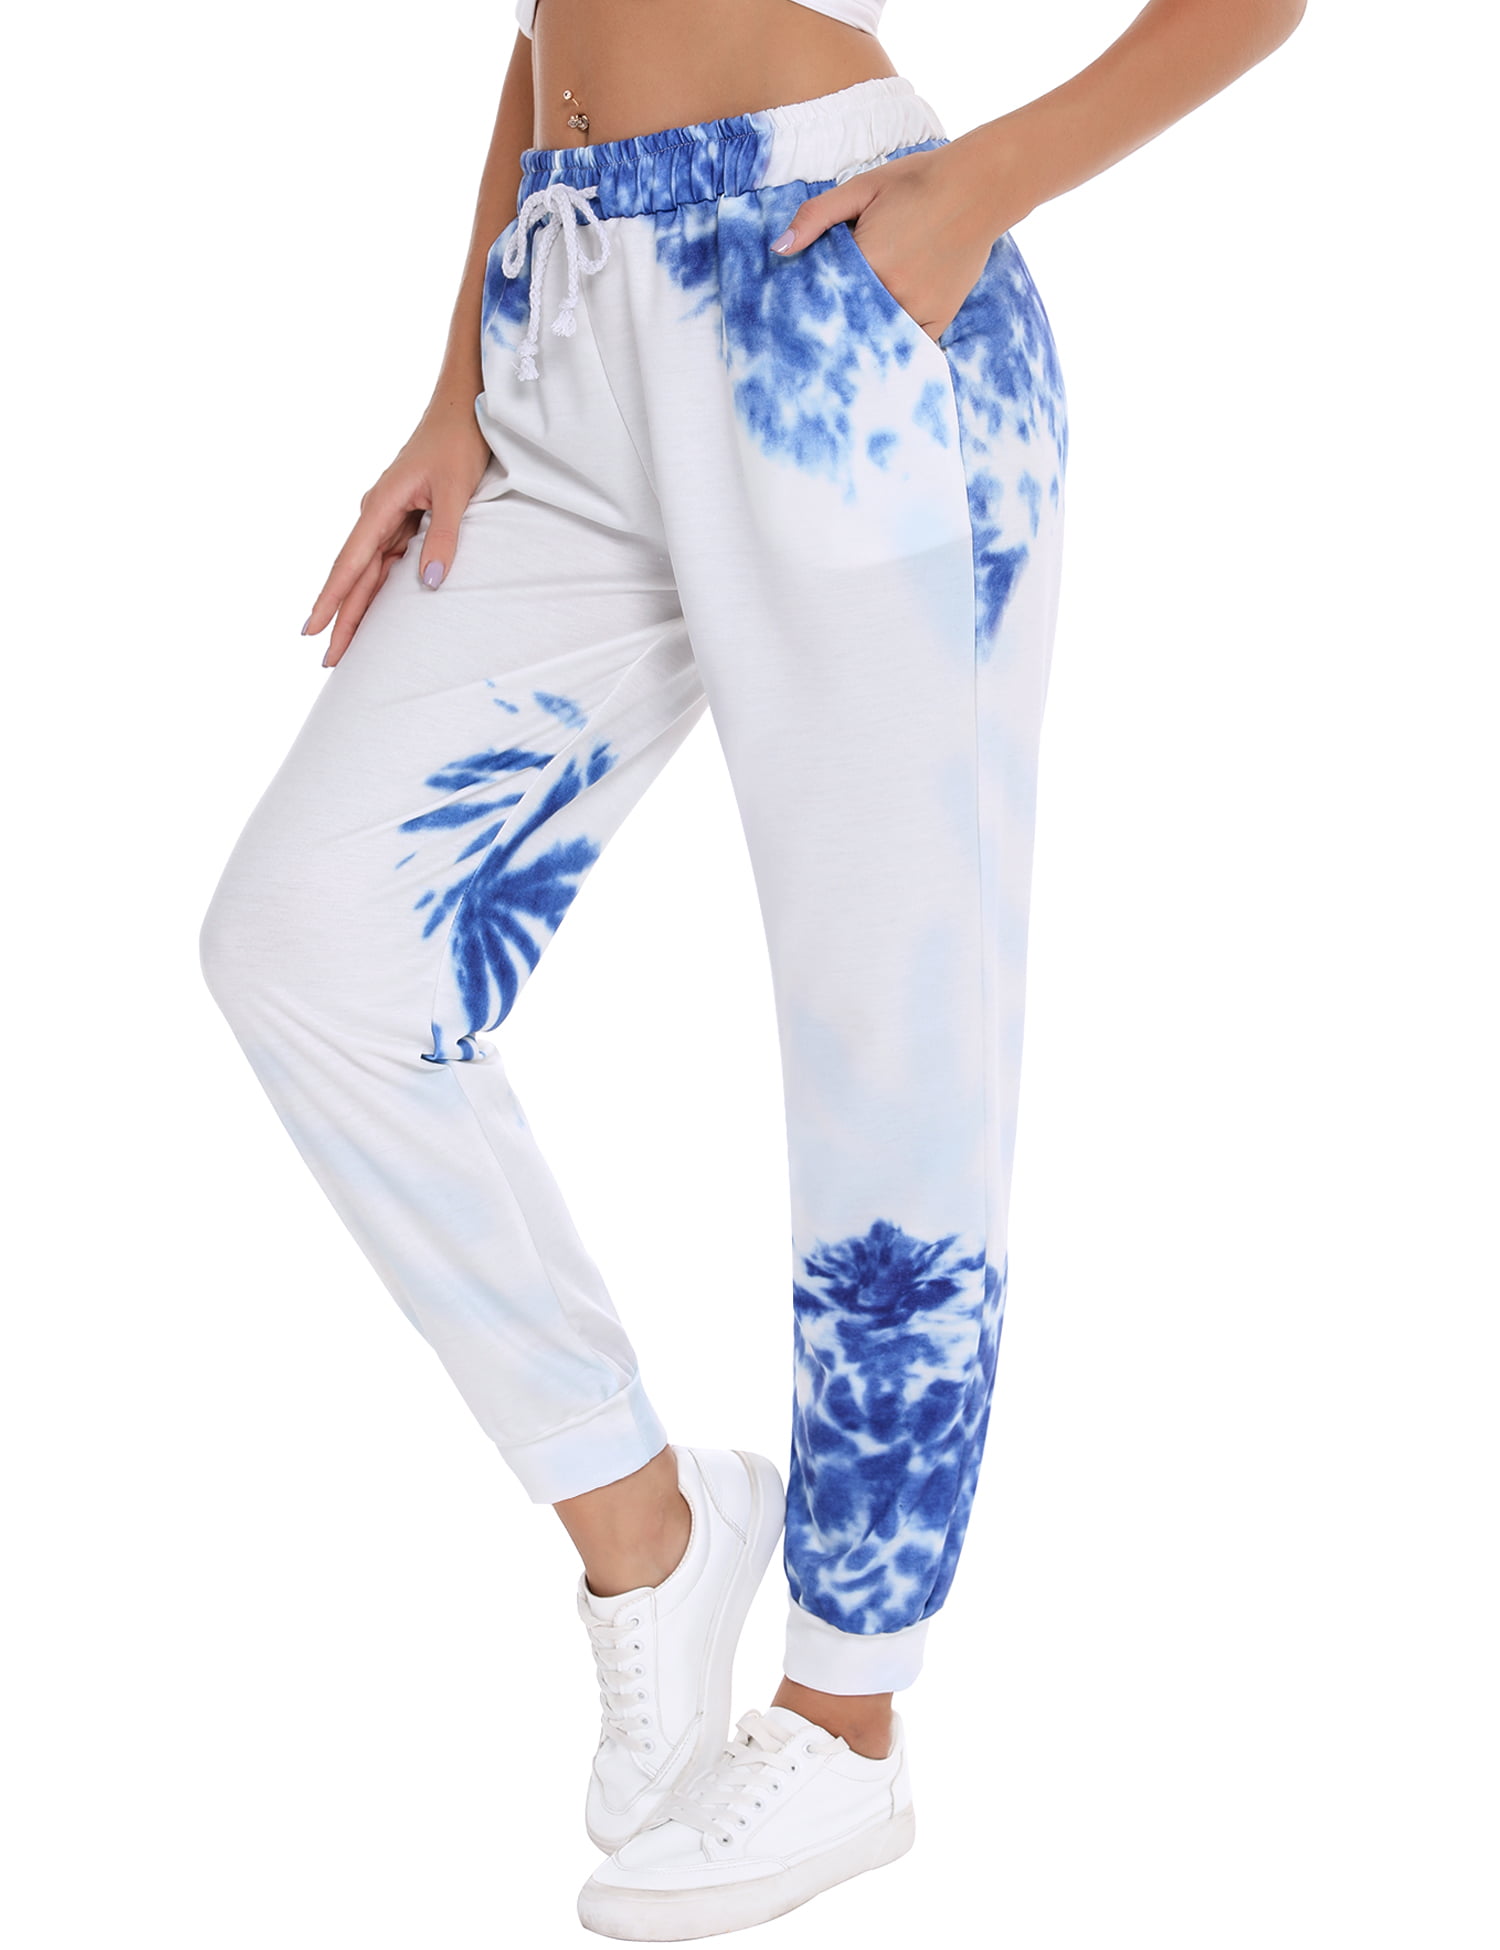 Irevial Women Tie Dye Pajamas Pants Casual Comfy Elastic Waist Drawstring Lounge Sleepwear Sweatpants with Pockets